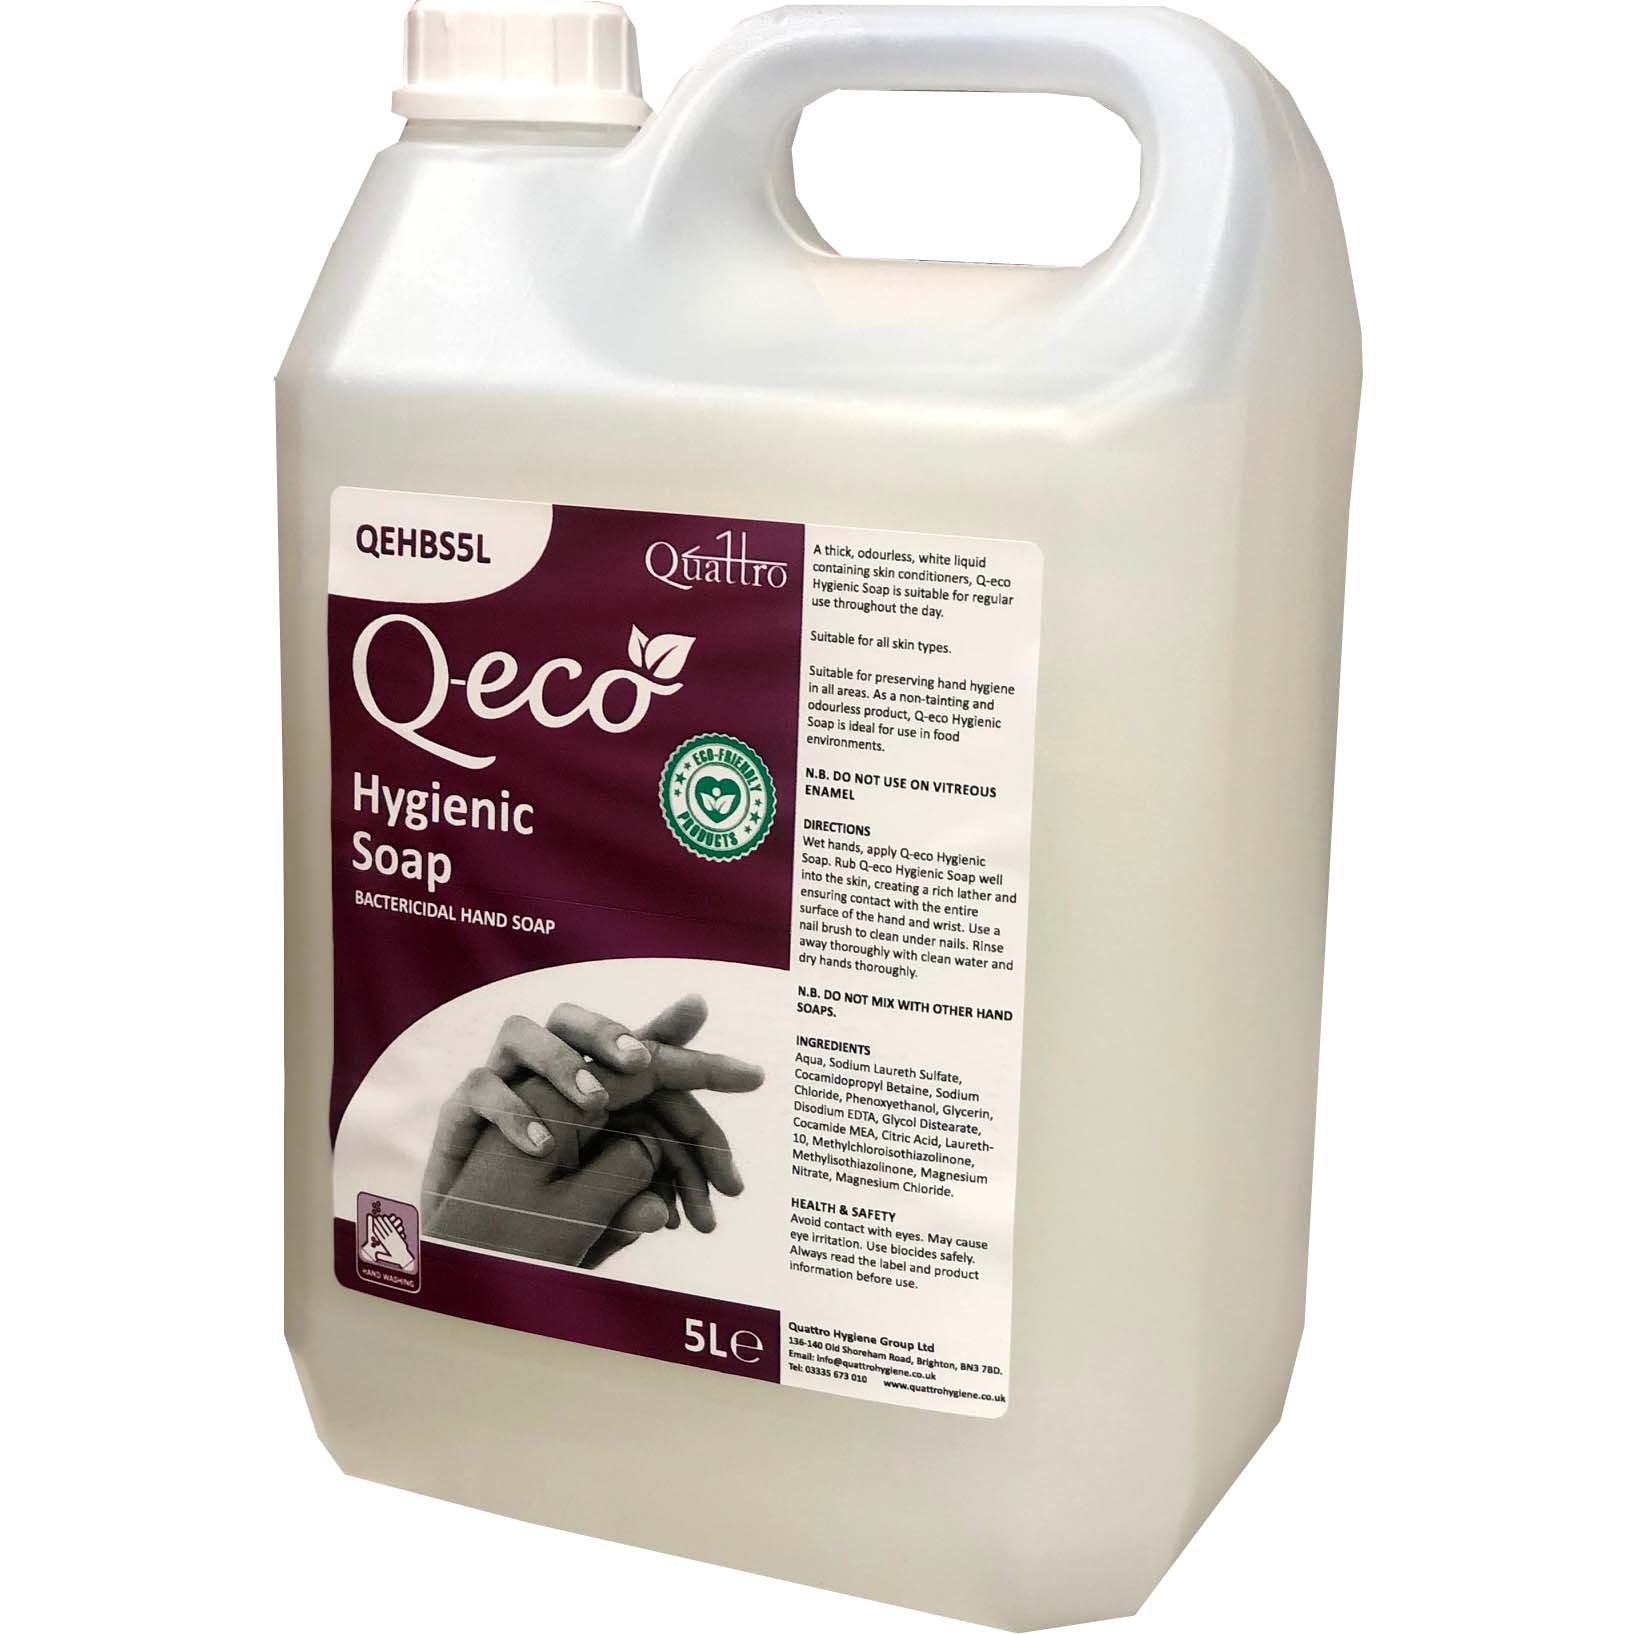 Q-Eco-Hygenic-Soap---Bactericidal-Hand-Soap-5litre